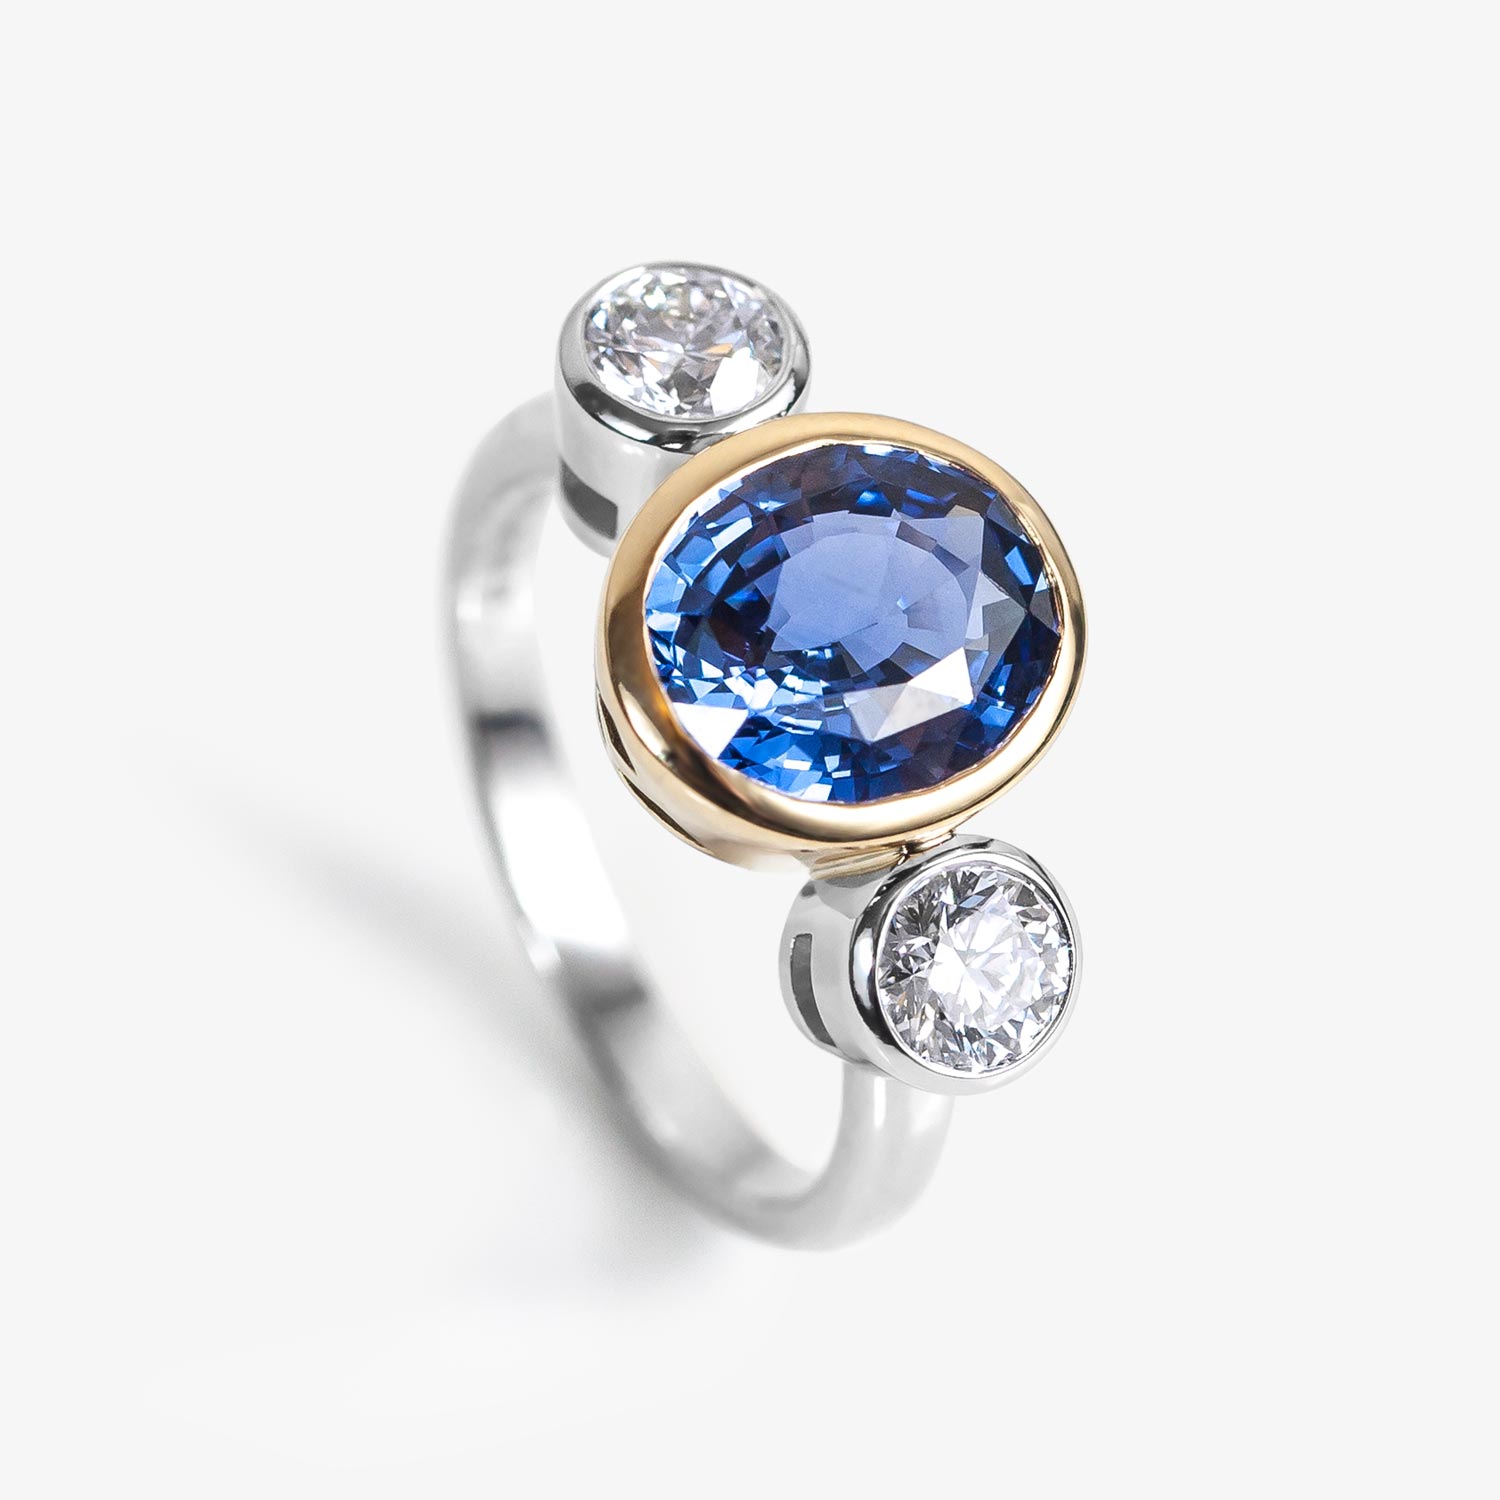 James’ Bespoke Sapphire Engagement Ring